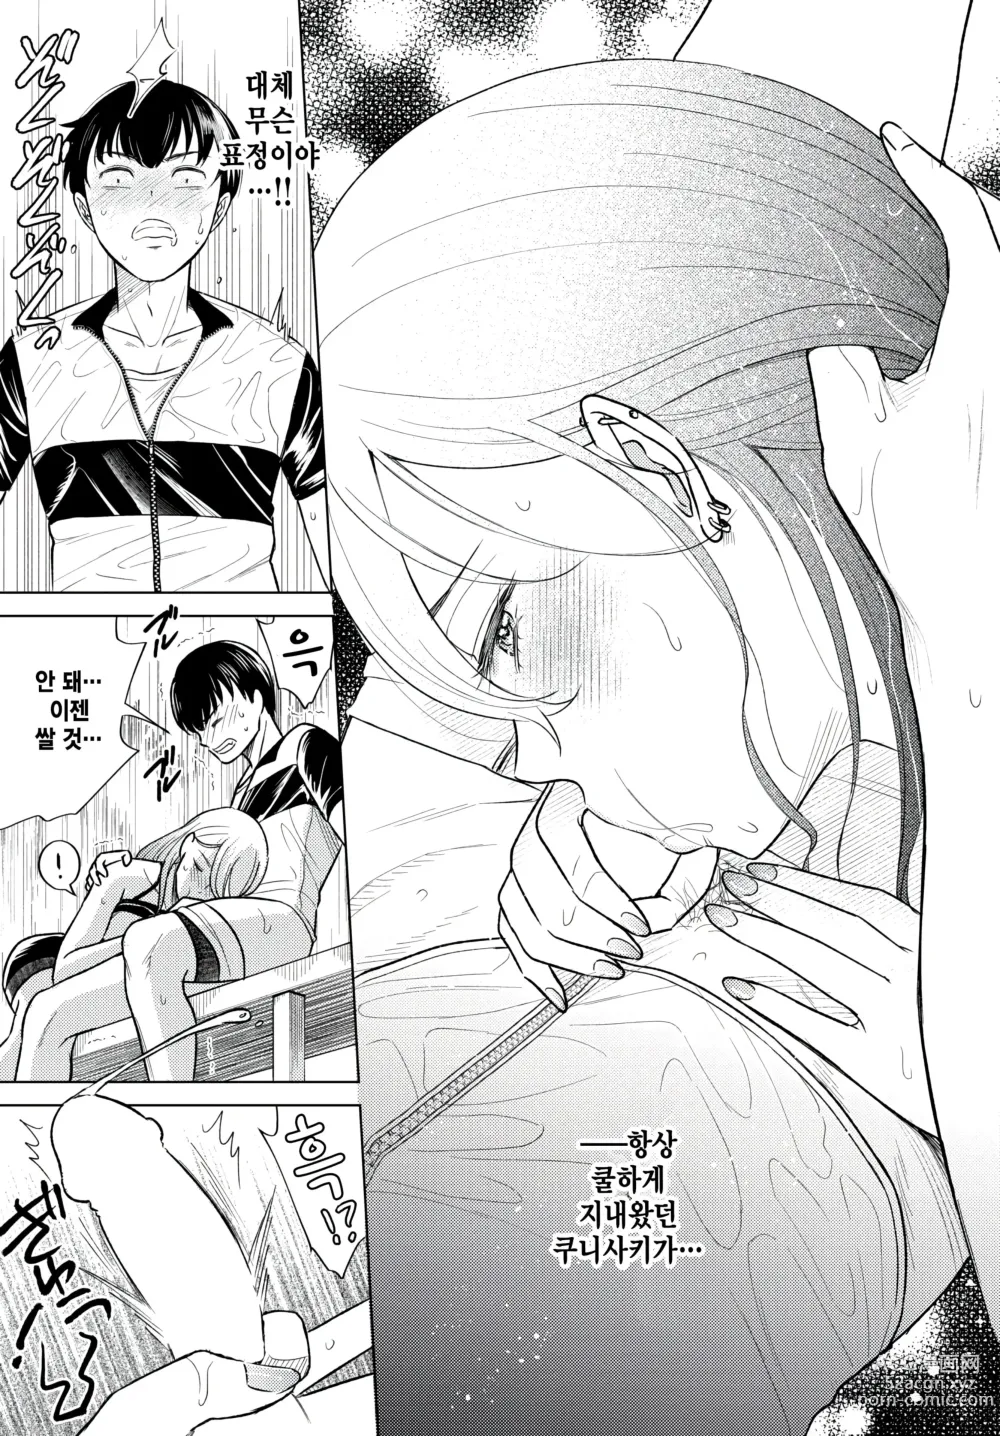 Page 9 of manga Seishun Hill Climb